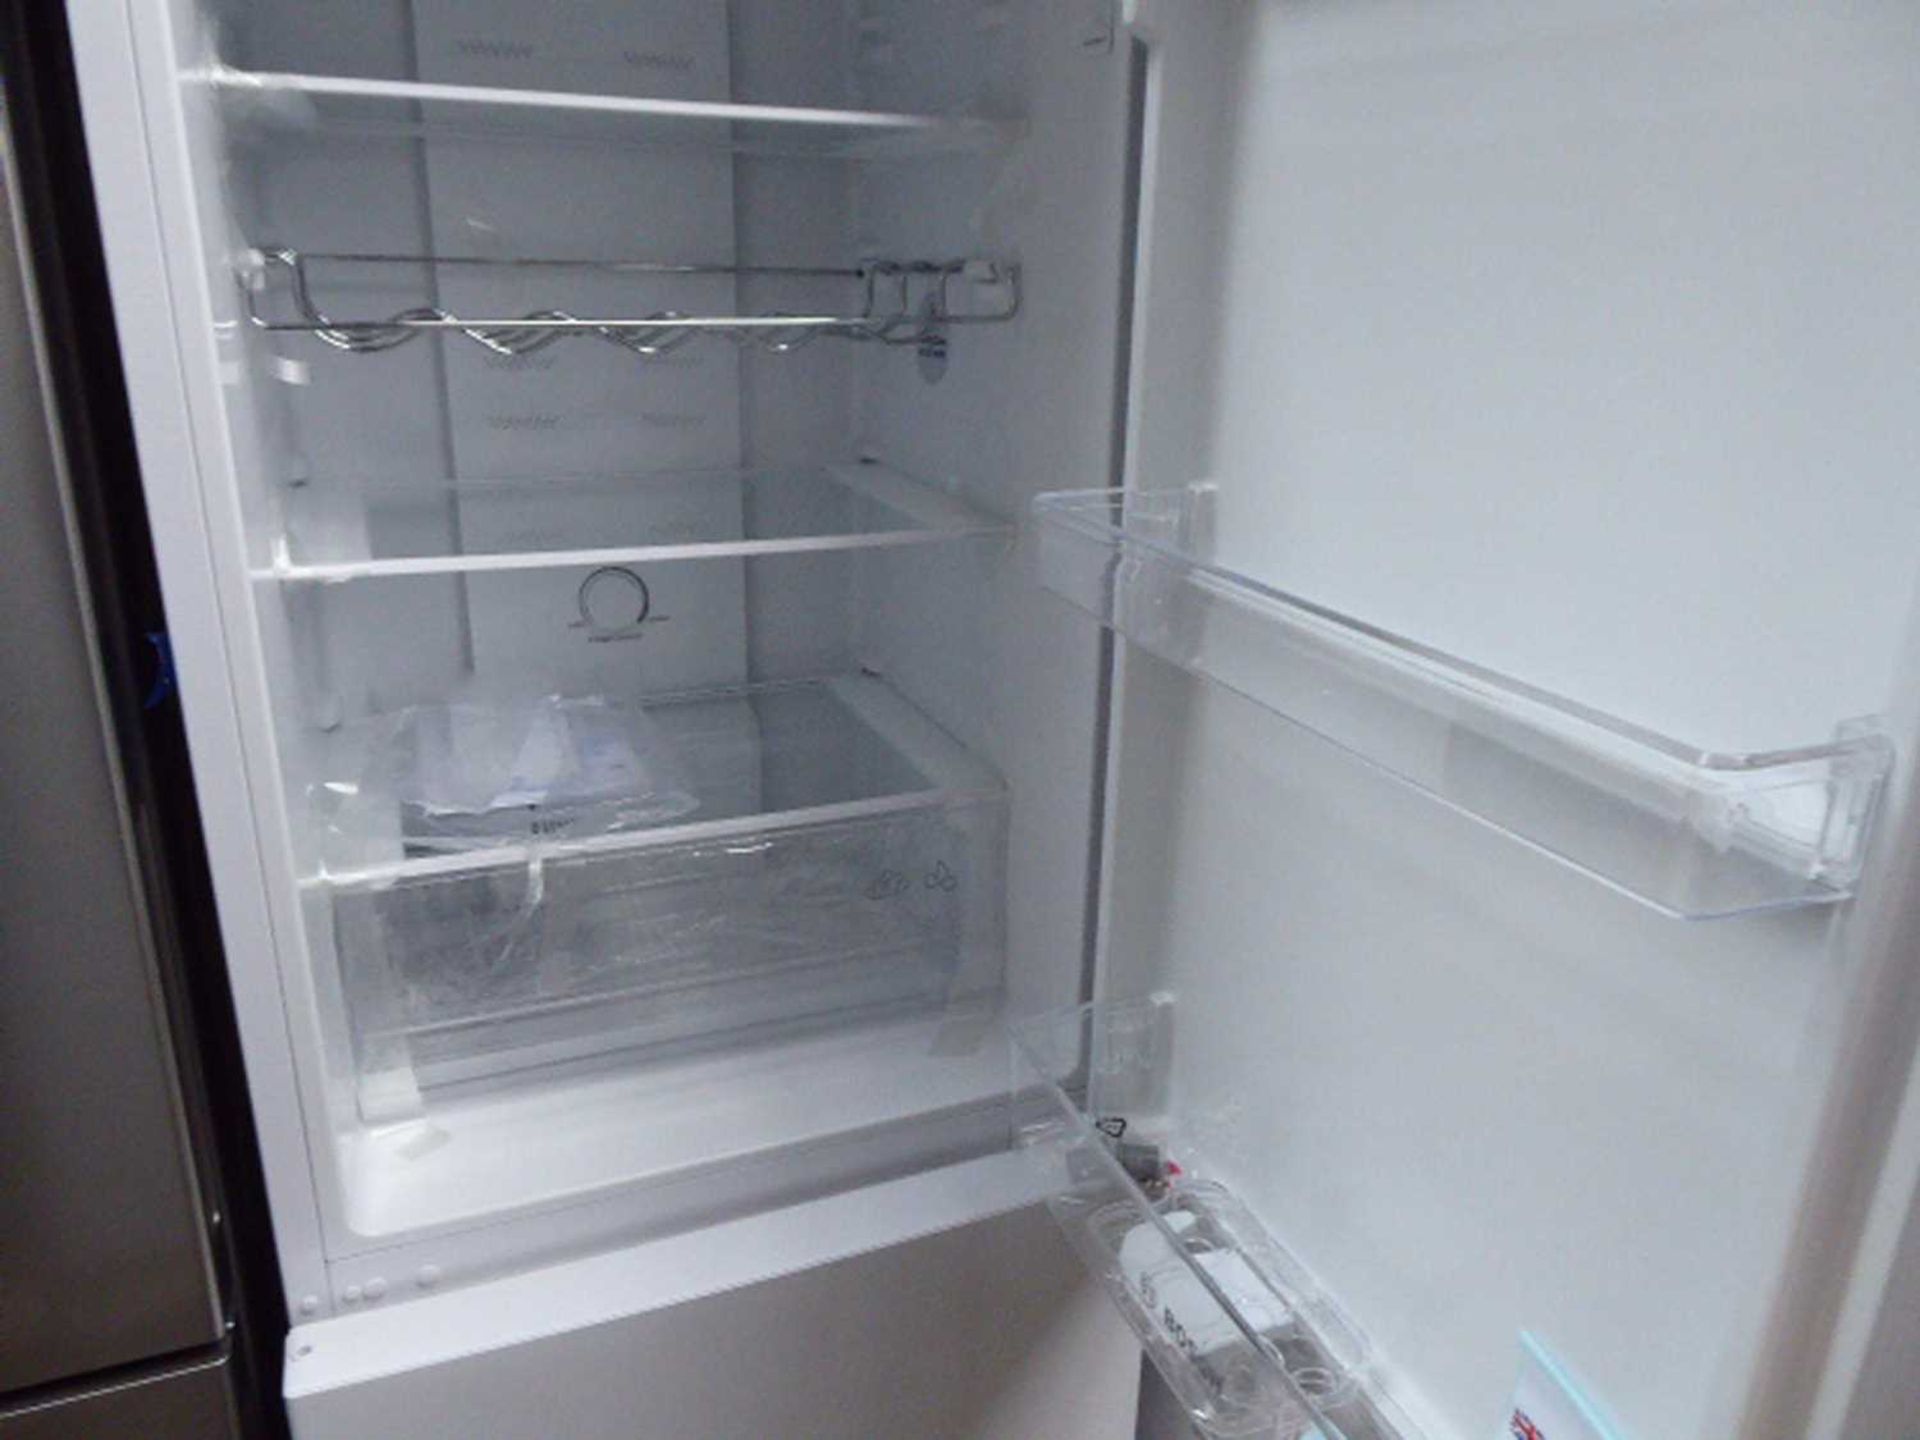 +VAT KGN27NWFAGB - Bosch - Free-standing fridge-freezer - Image 3 of 3